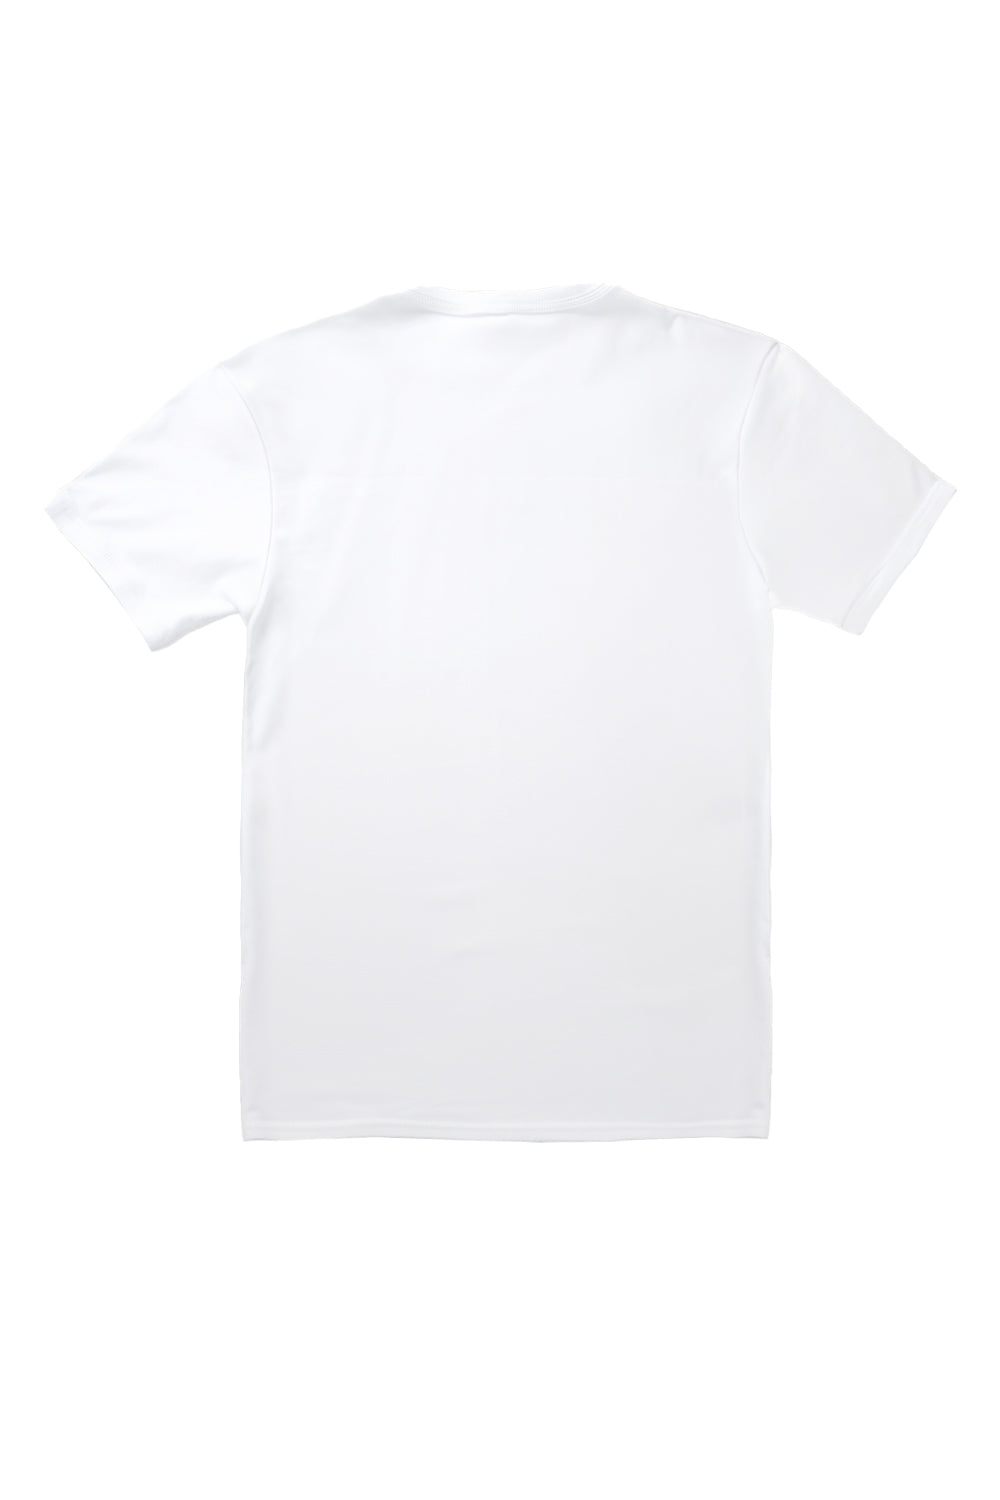 Paris Mon Amour T-Shirt in White (Custom Packs)